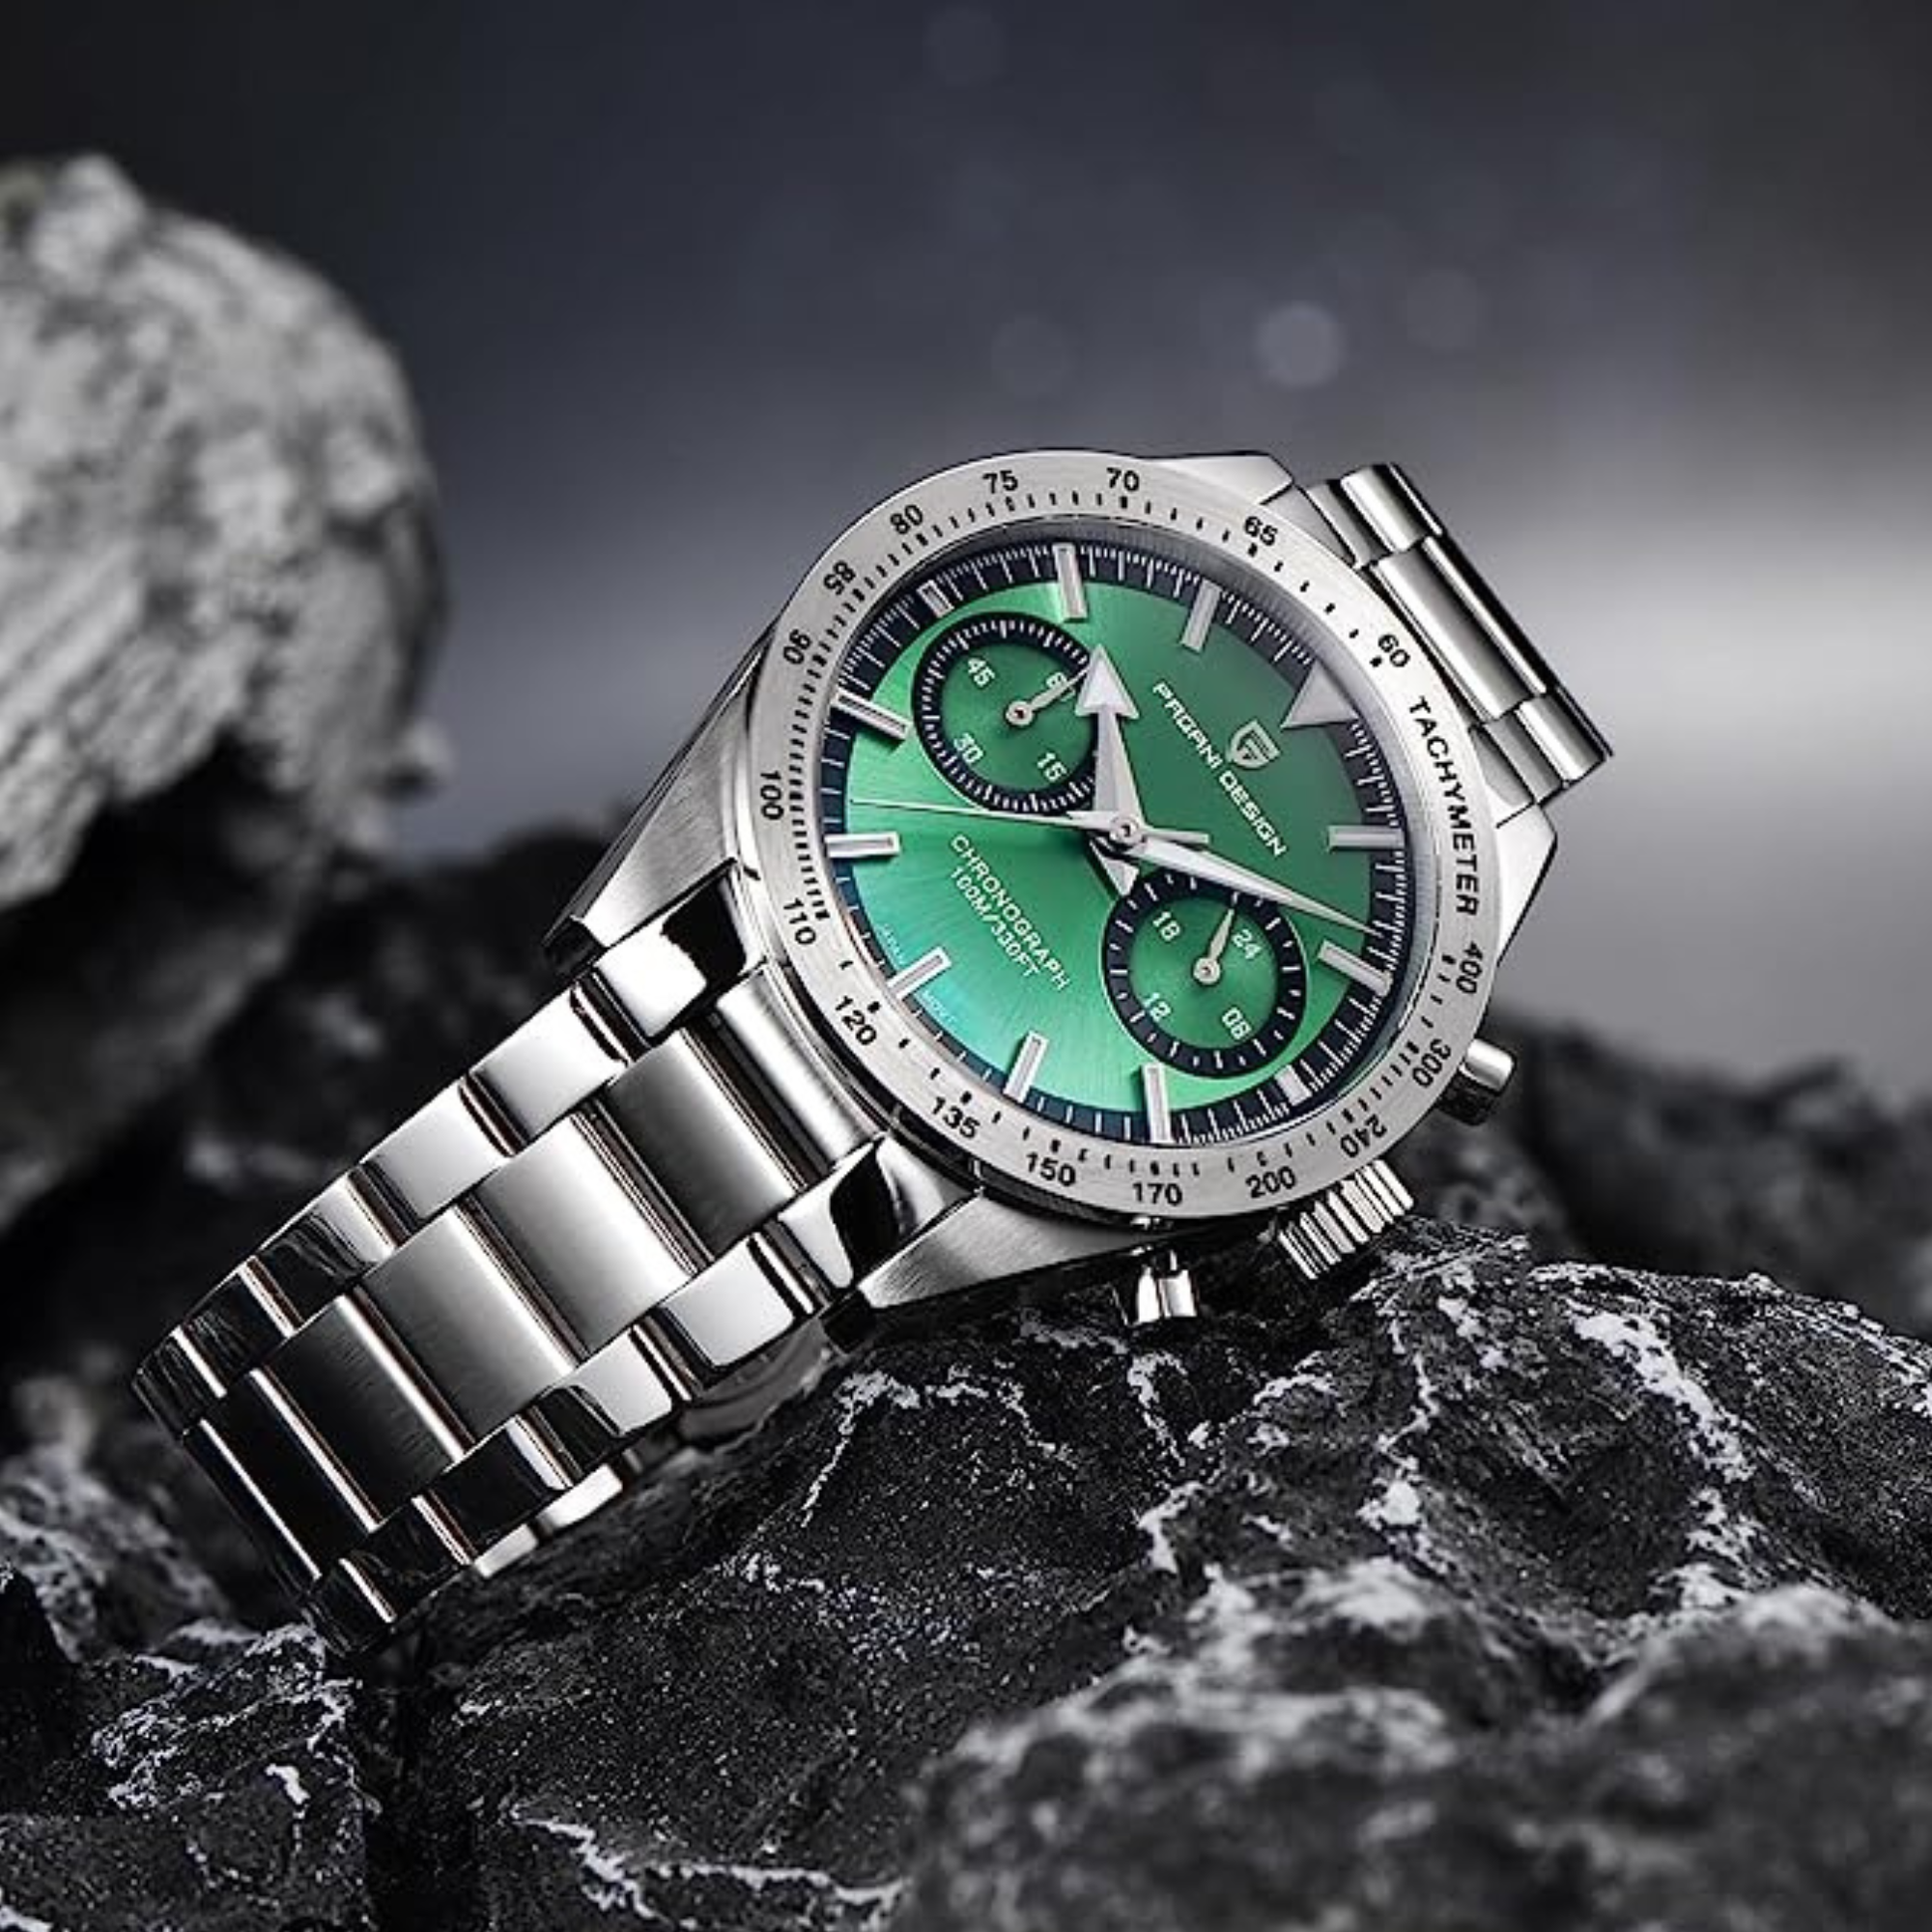 Pagani Design 1766 Homage Men's Chronograph Watches Stainless Steel 40mm Case VK64 Quartz Movement 100M Waterproof Casual Sport Retro Watch - Green